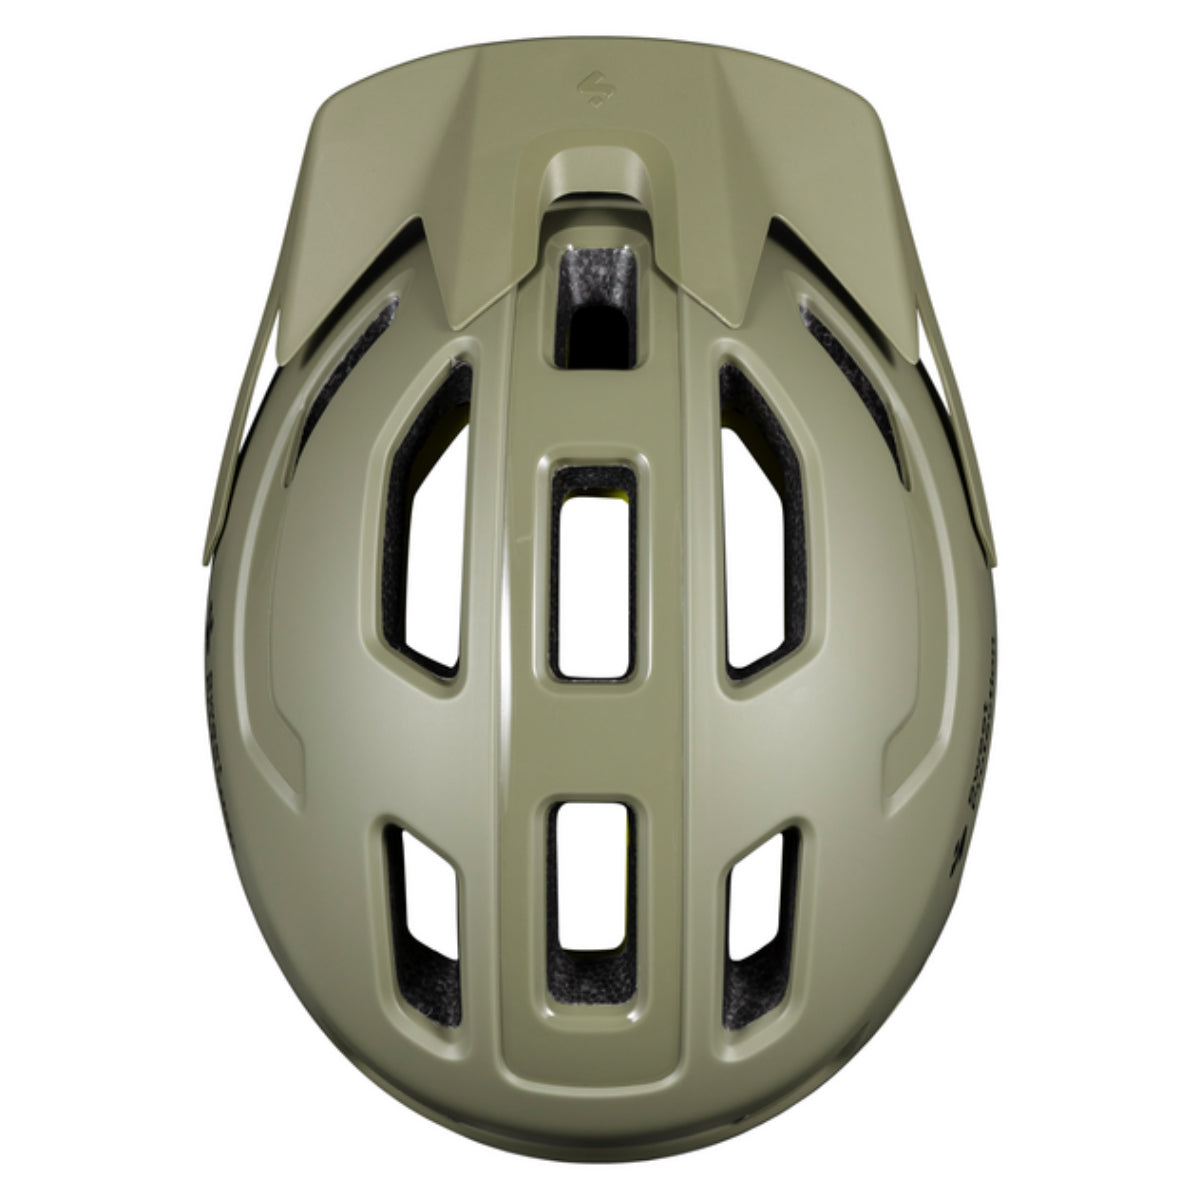 Sweet Protection - Ripper Helmet - Woodland